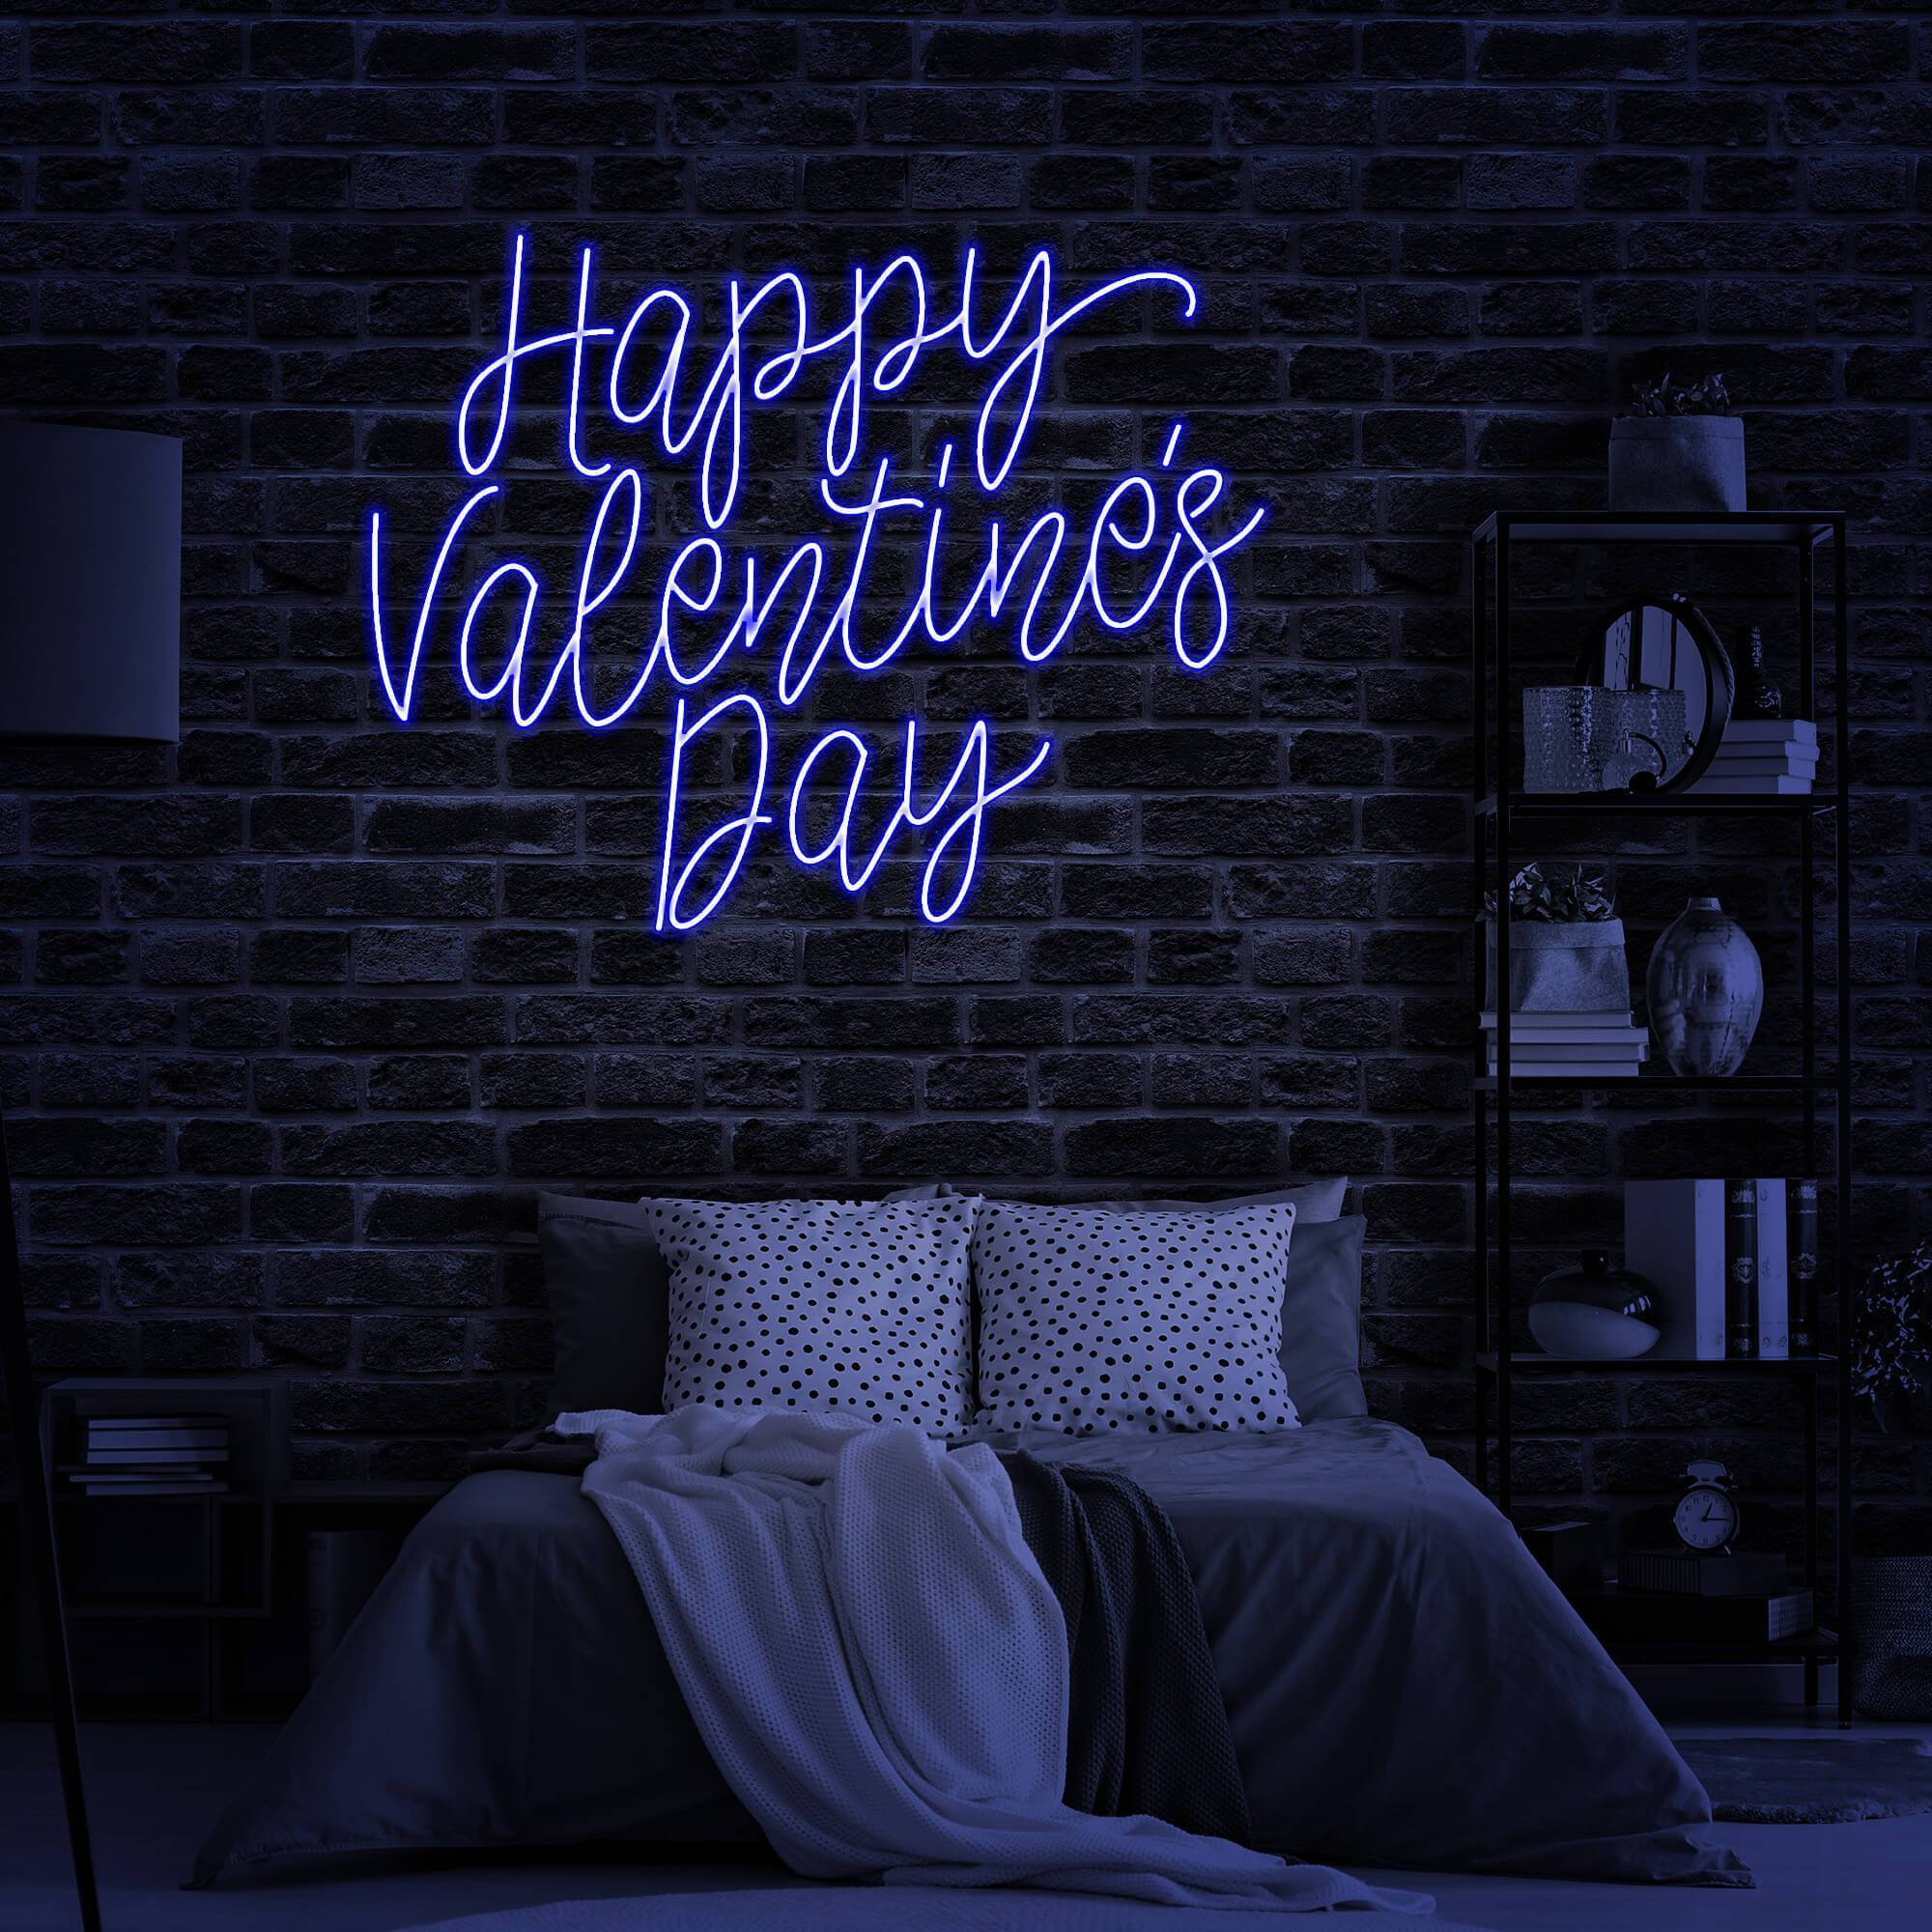 Happy Valentine's Day" Neon Signs Lights